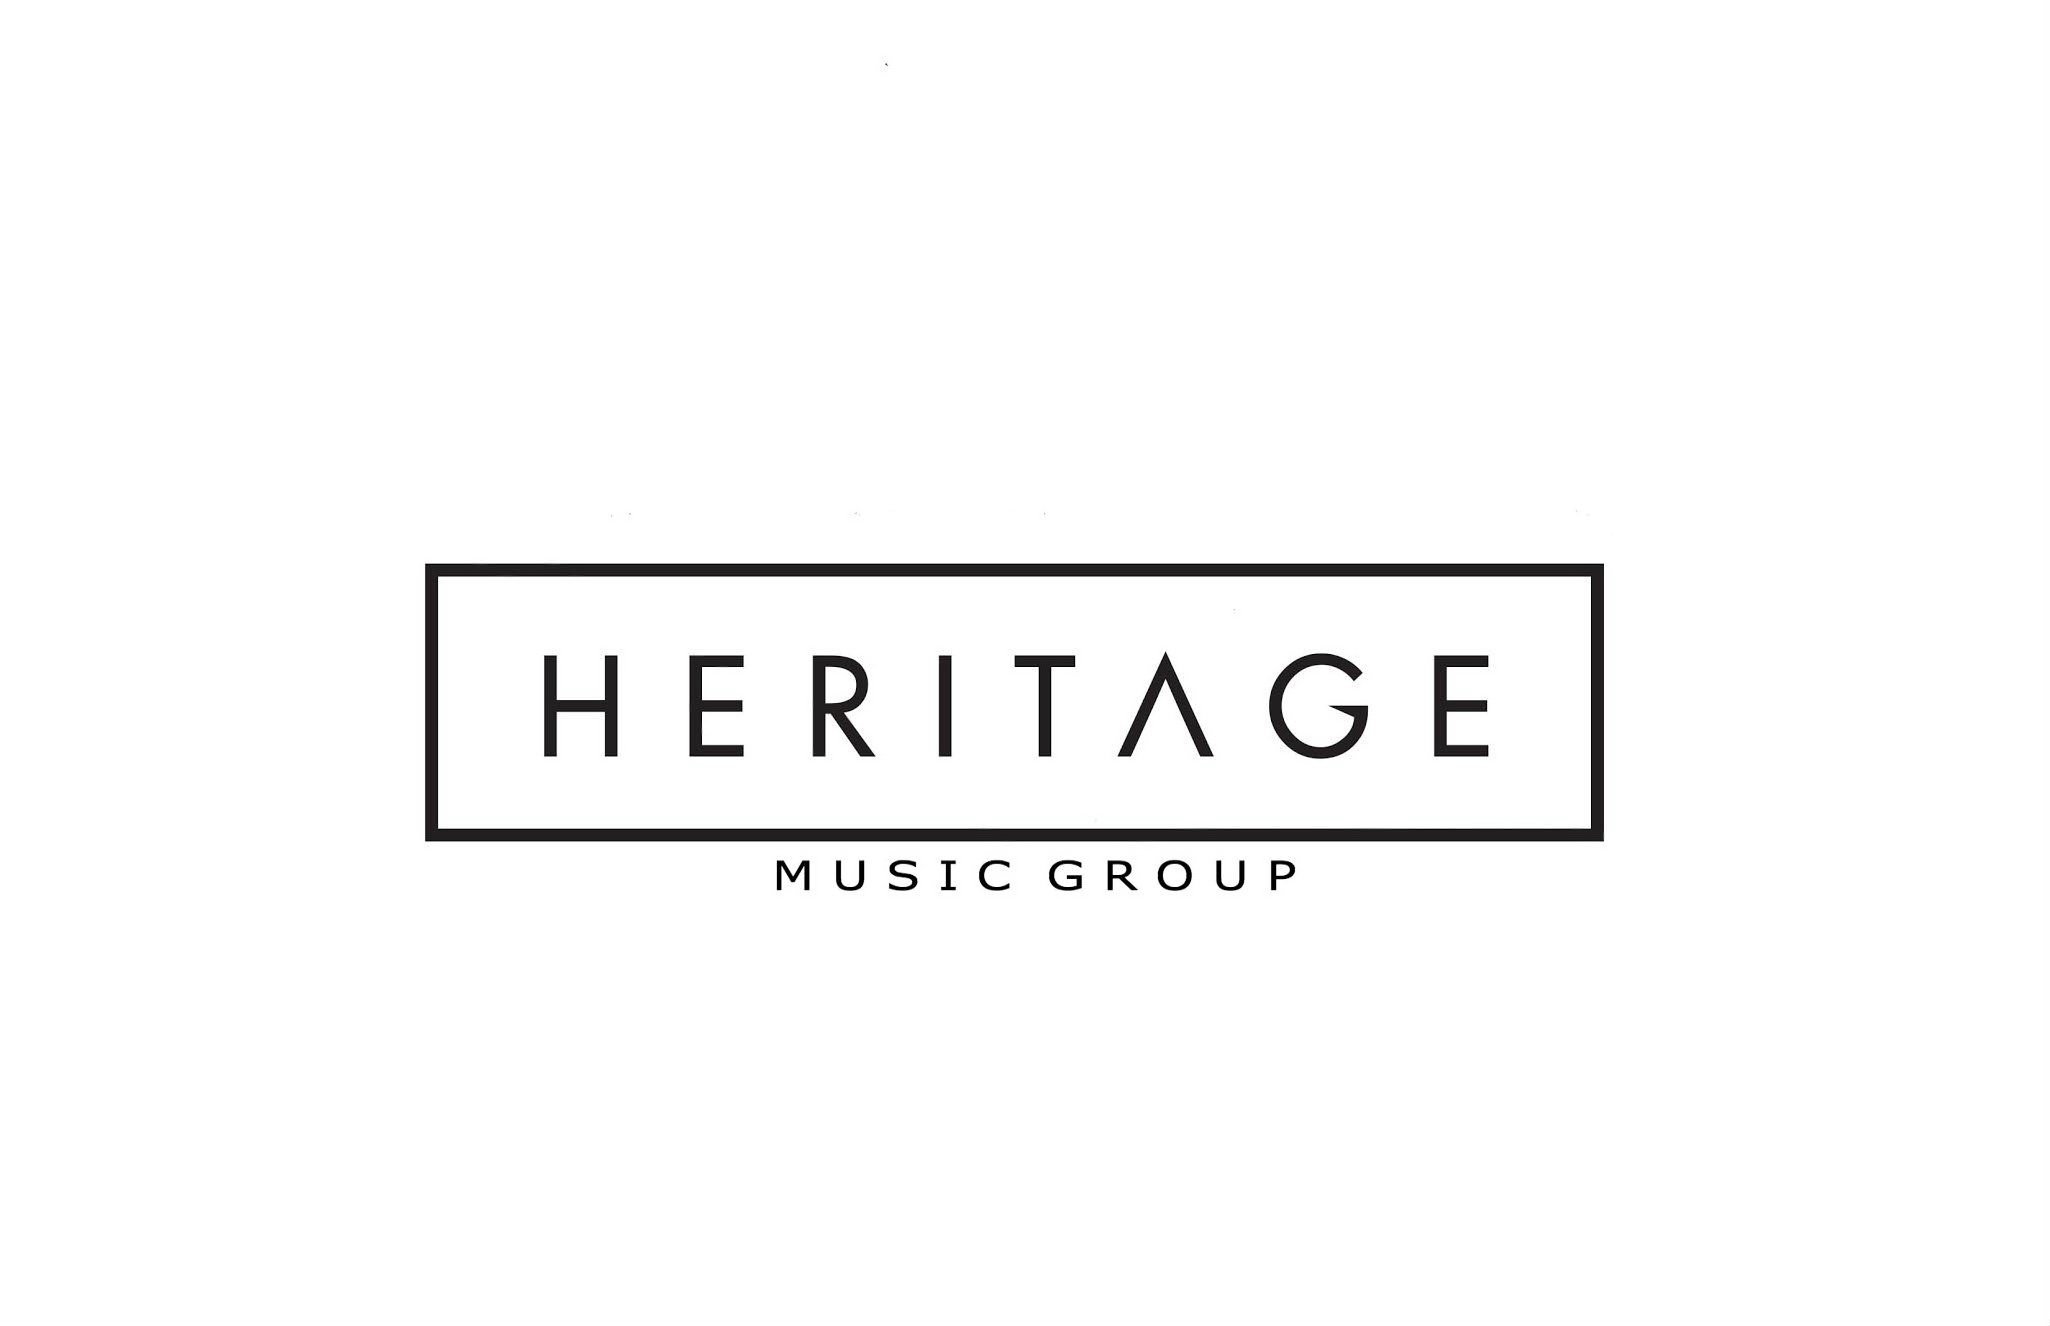  HERITAGE MUSIC GROUP